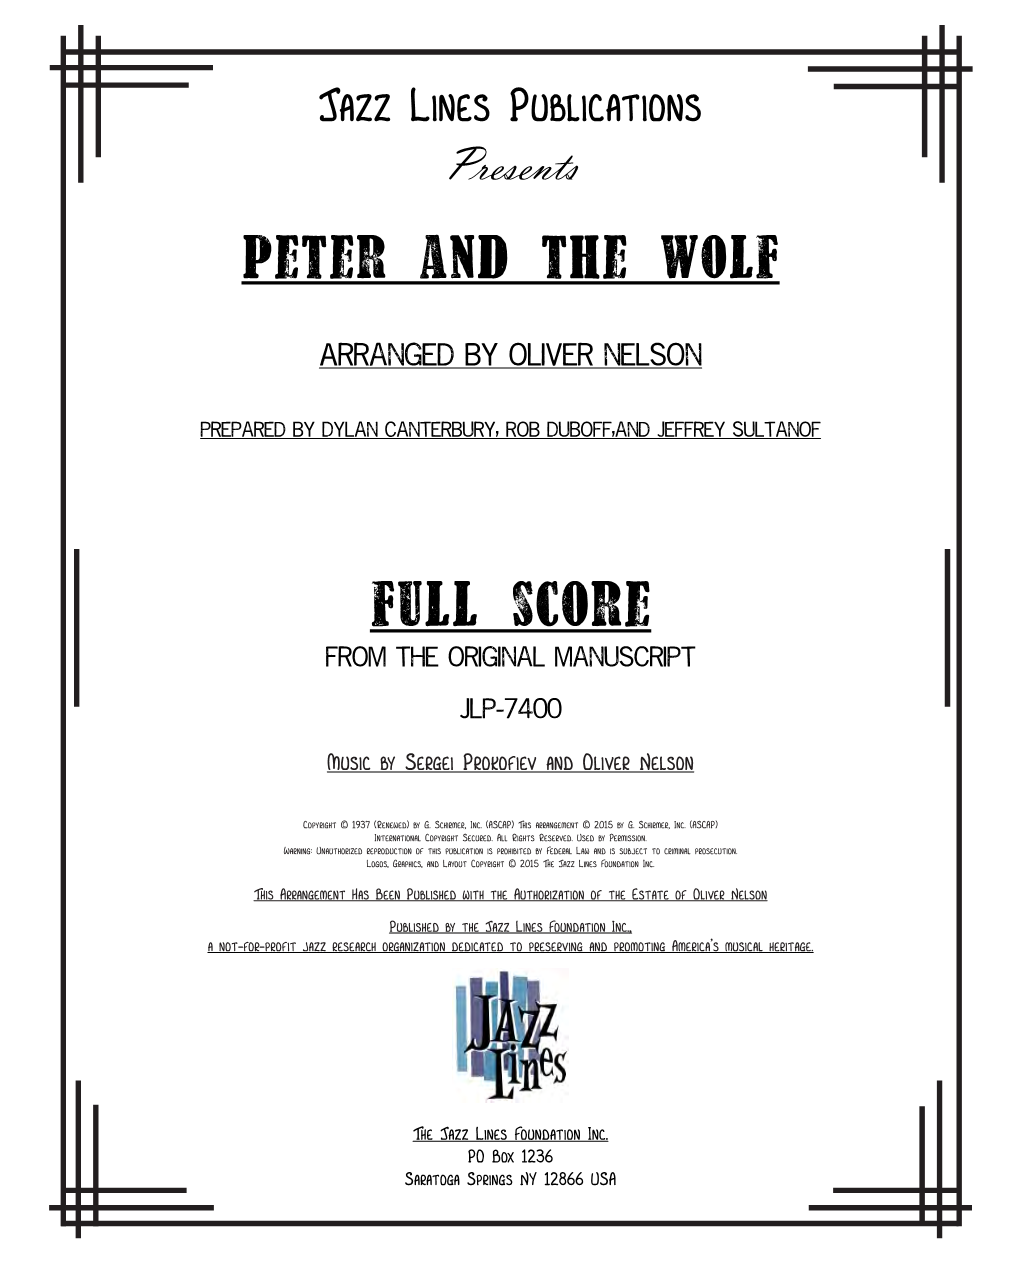 Full Score from the Original Manuscript